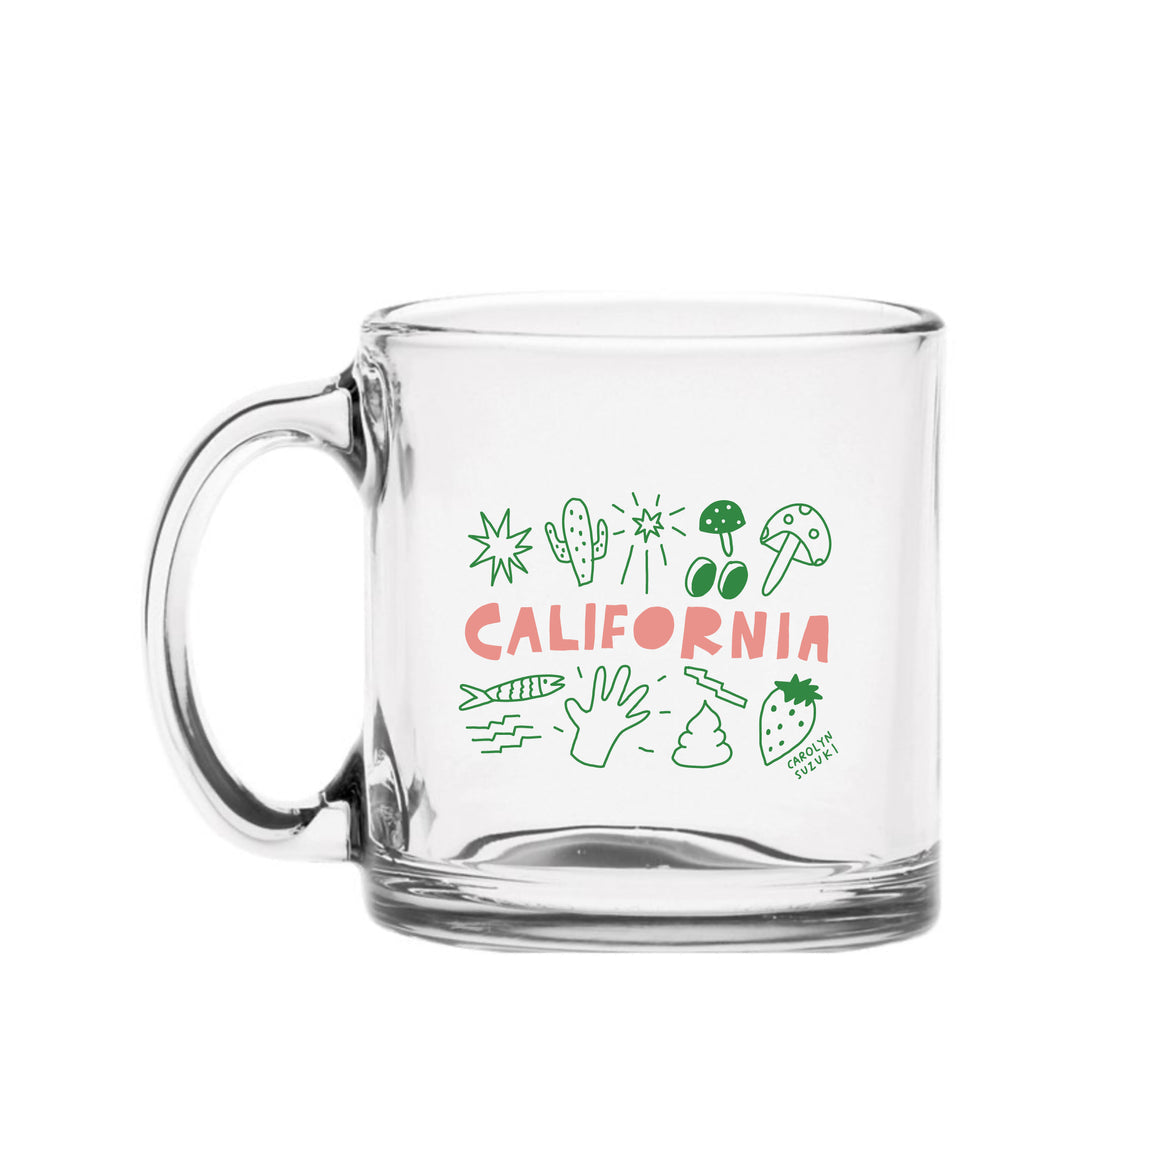 California Glass Mug